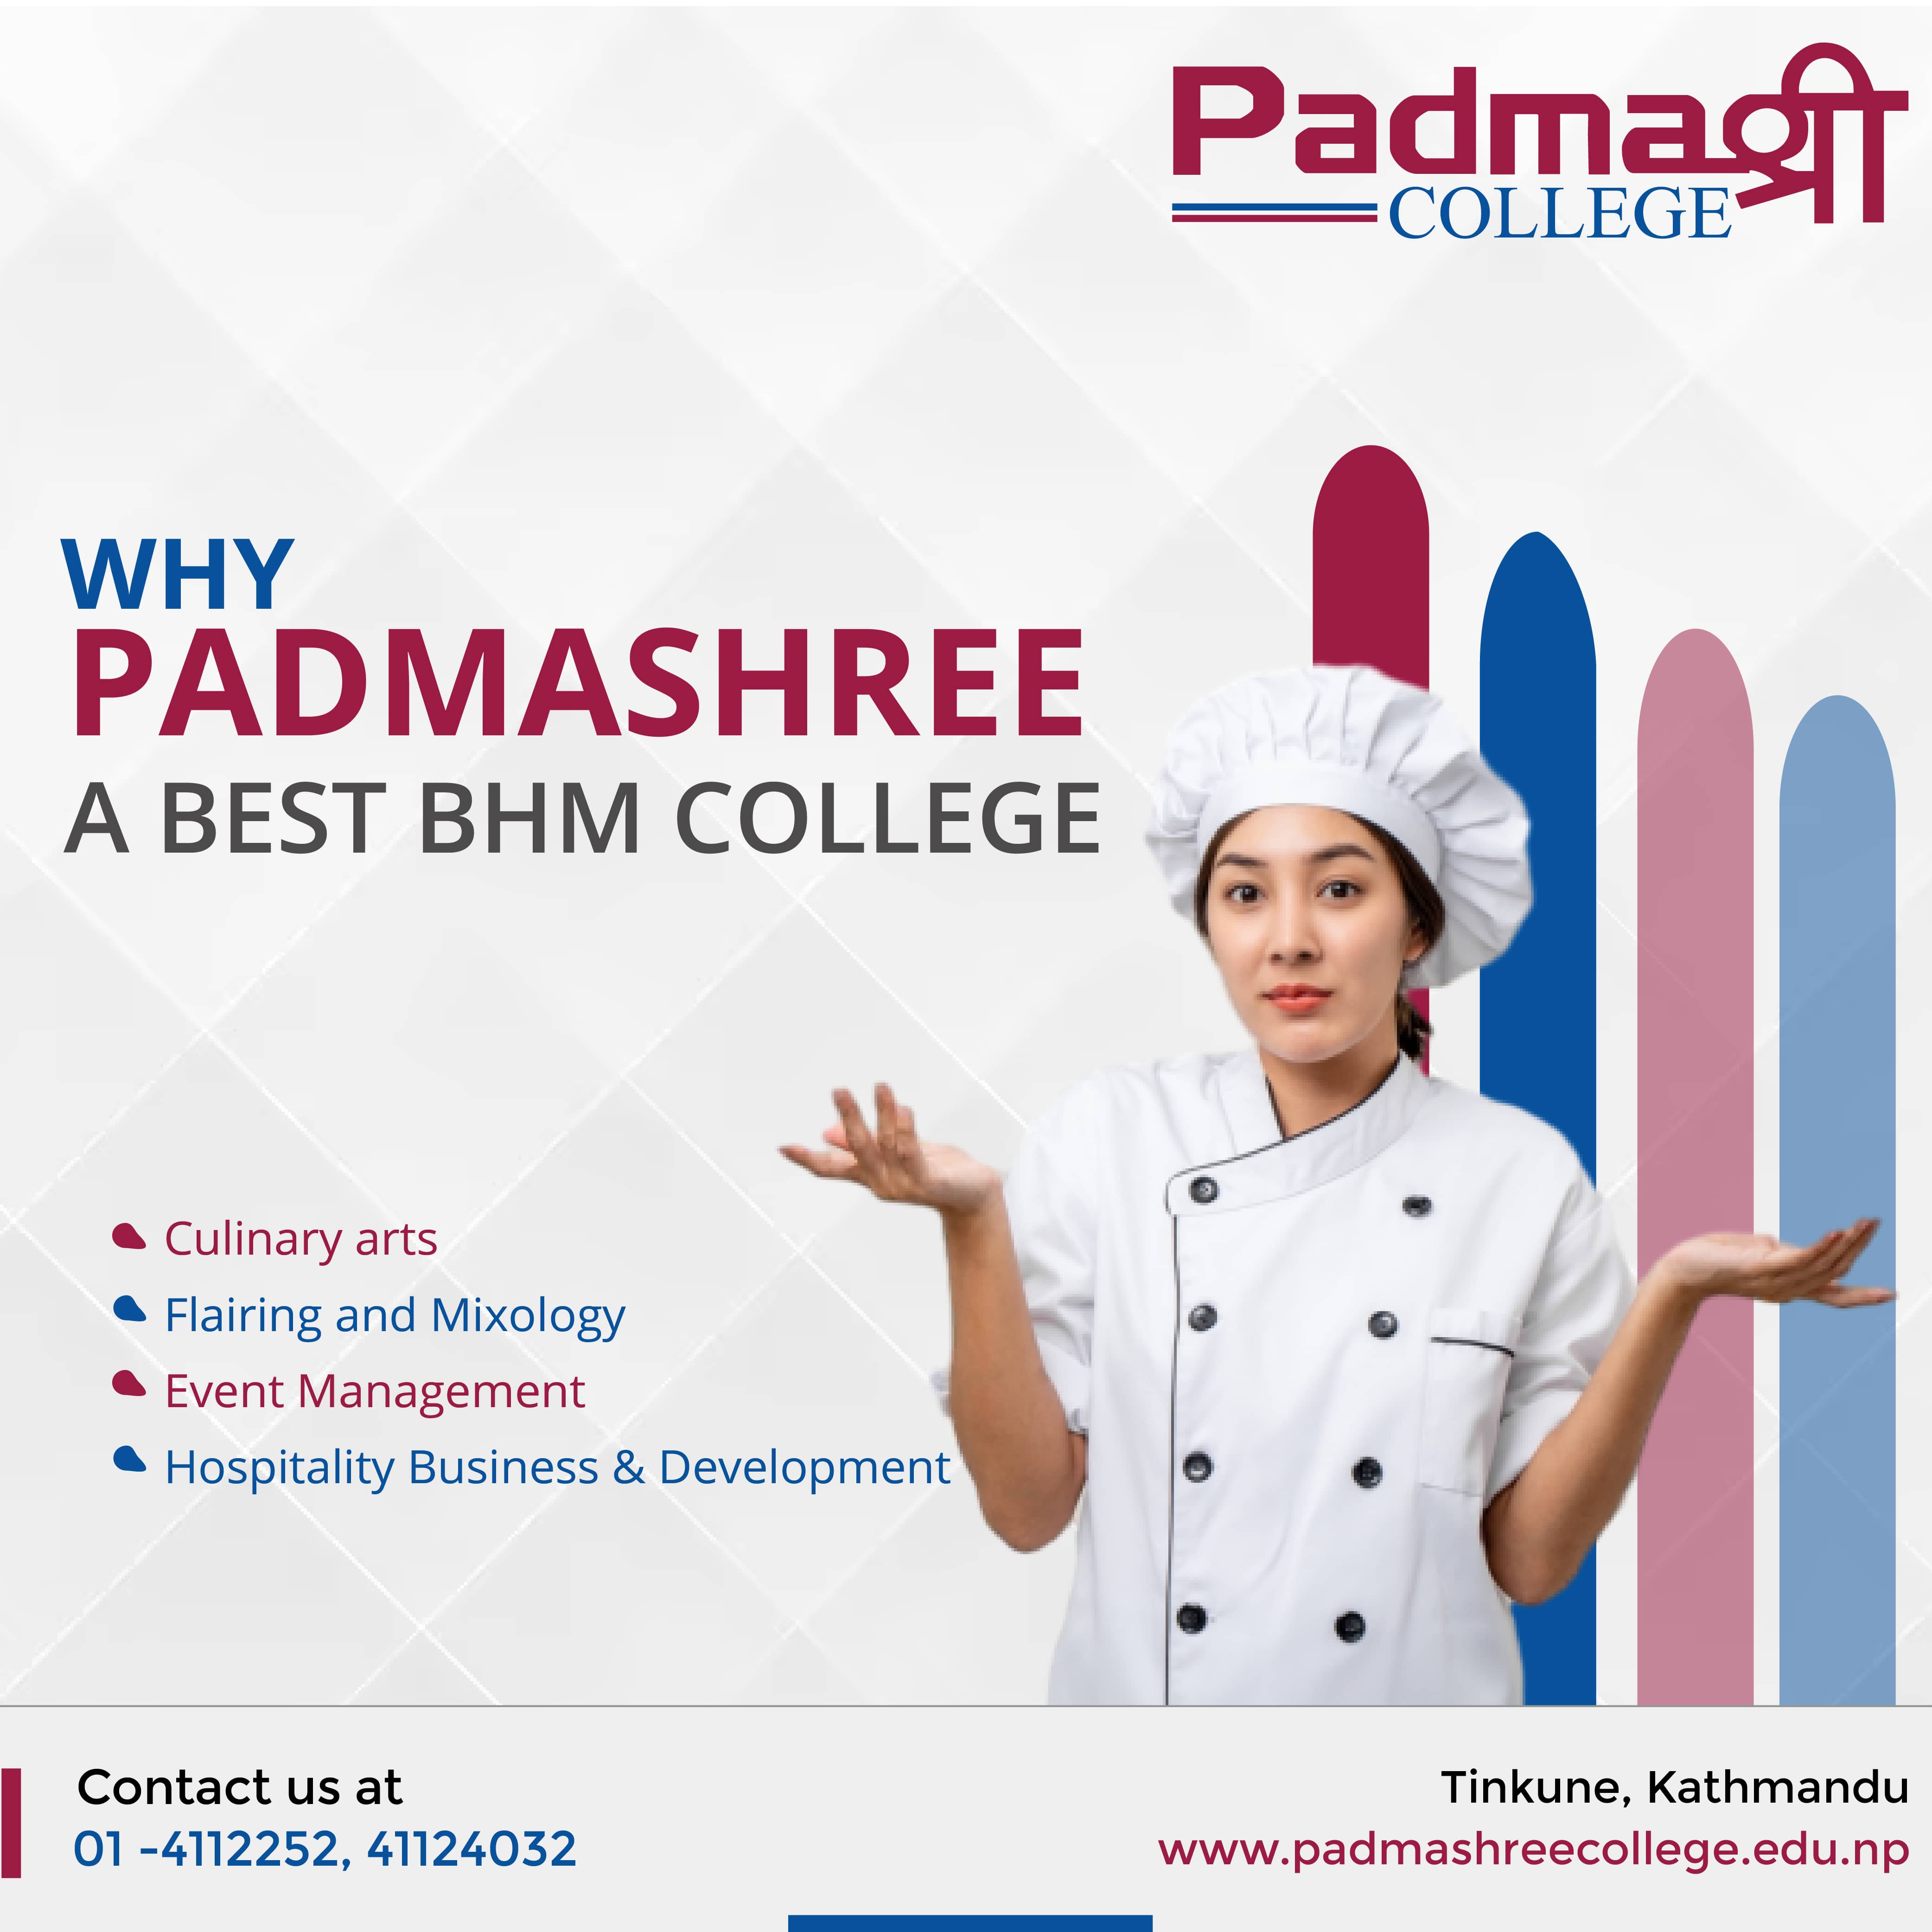 Why is Padmashree a Best BHM College?